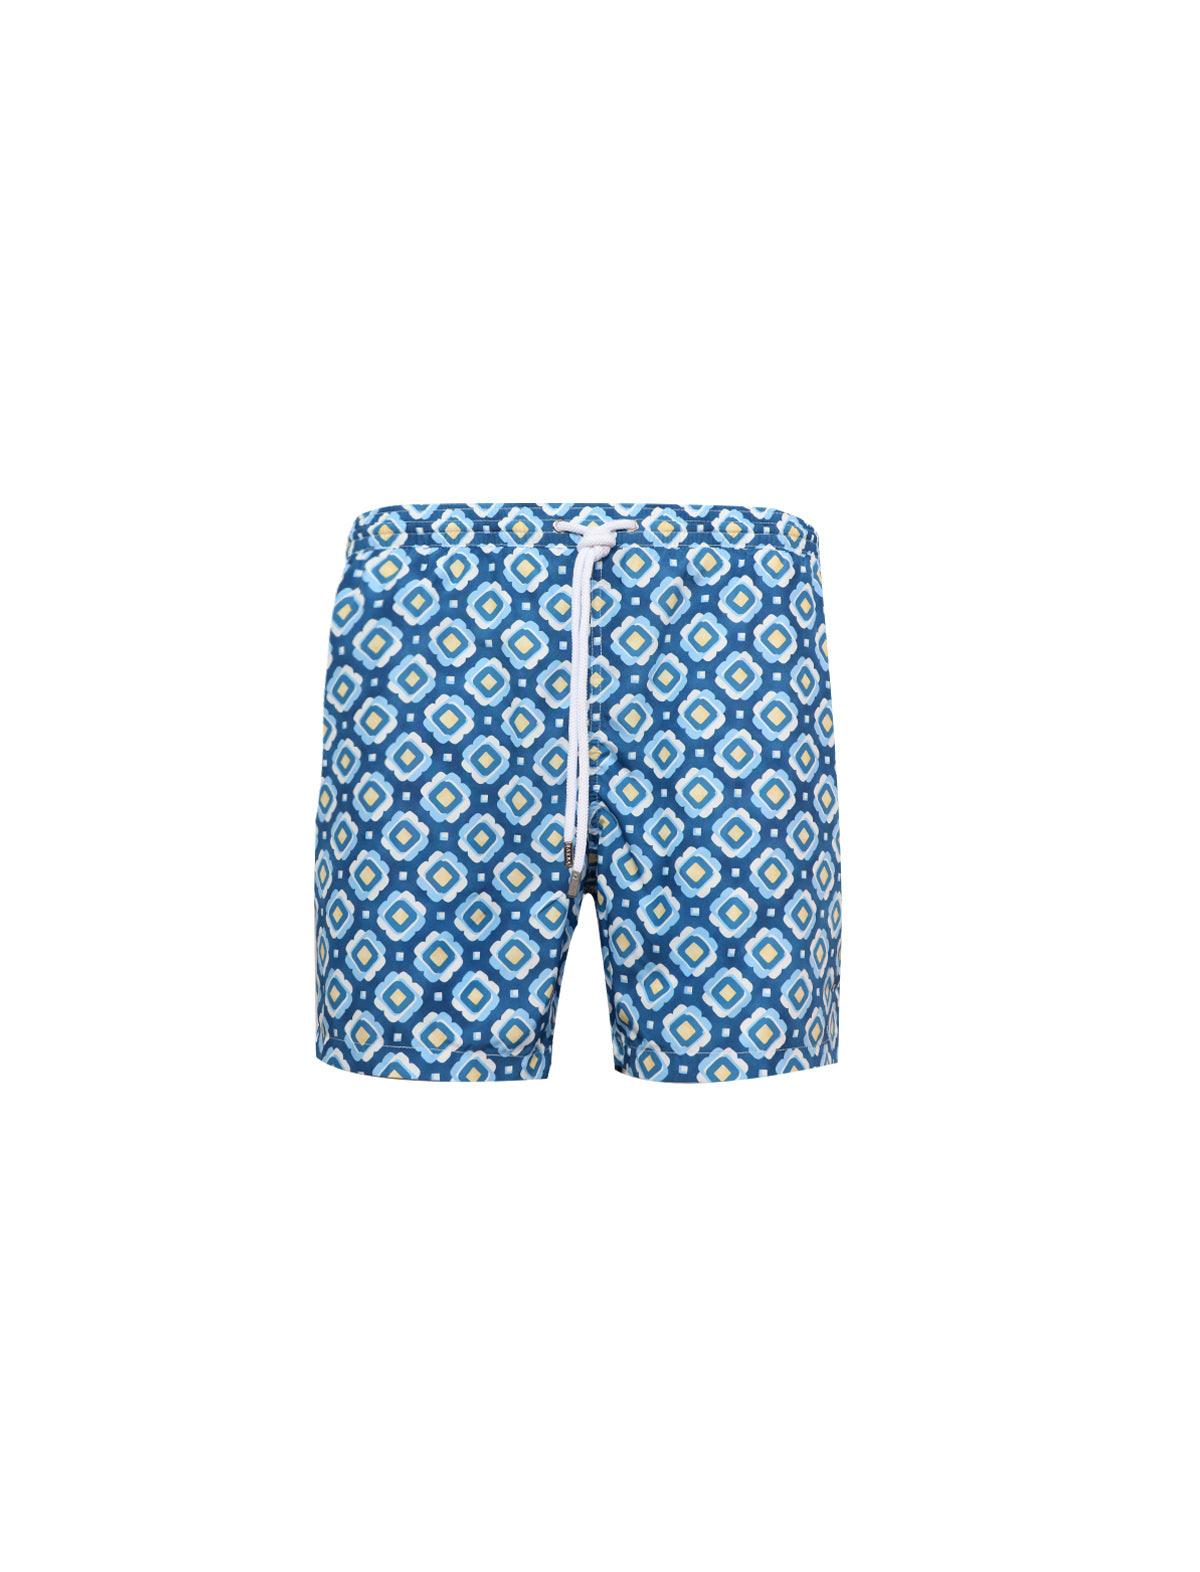 BARBA Napoli Swim Shorts in Blue Geometric Print